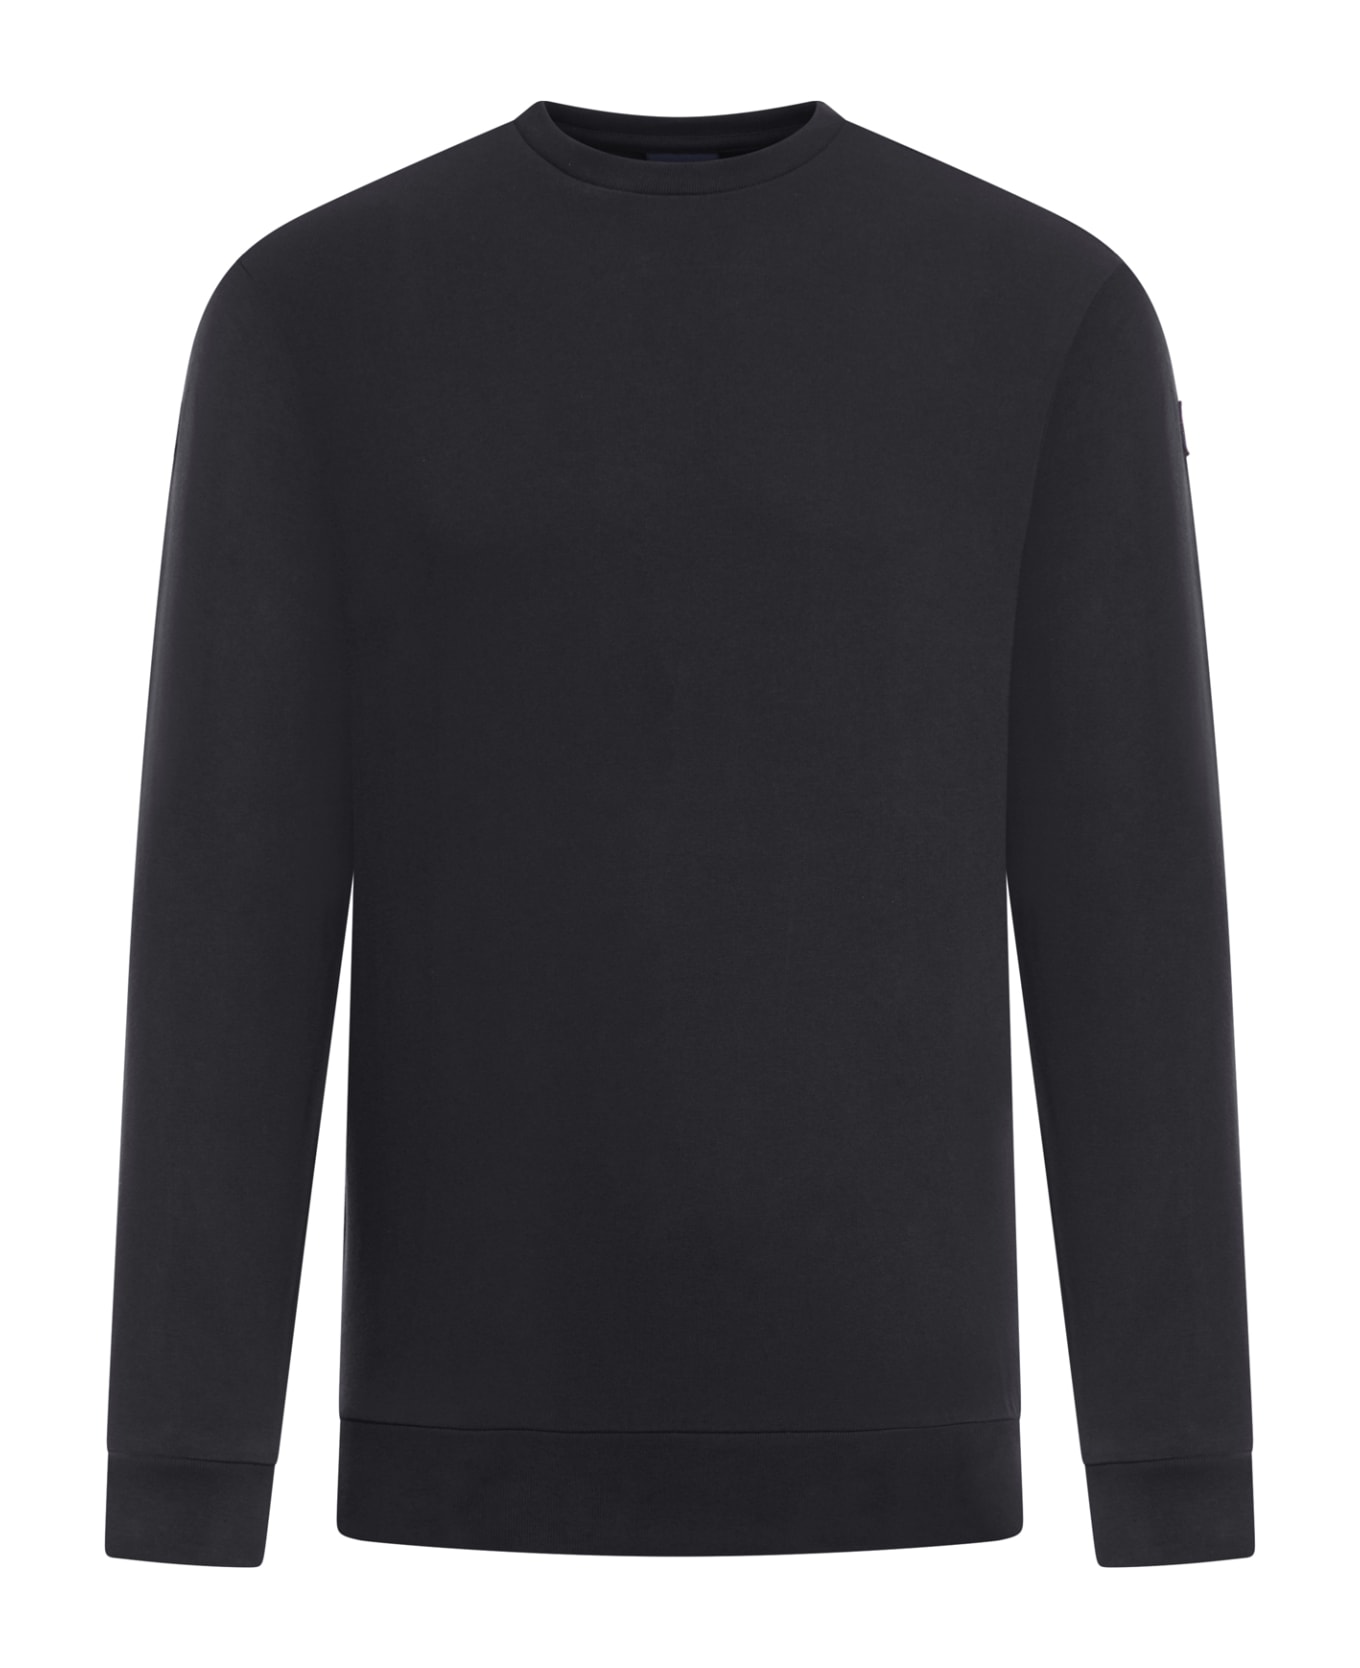 Paul&Shark Sweatshirt Cotton - Black